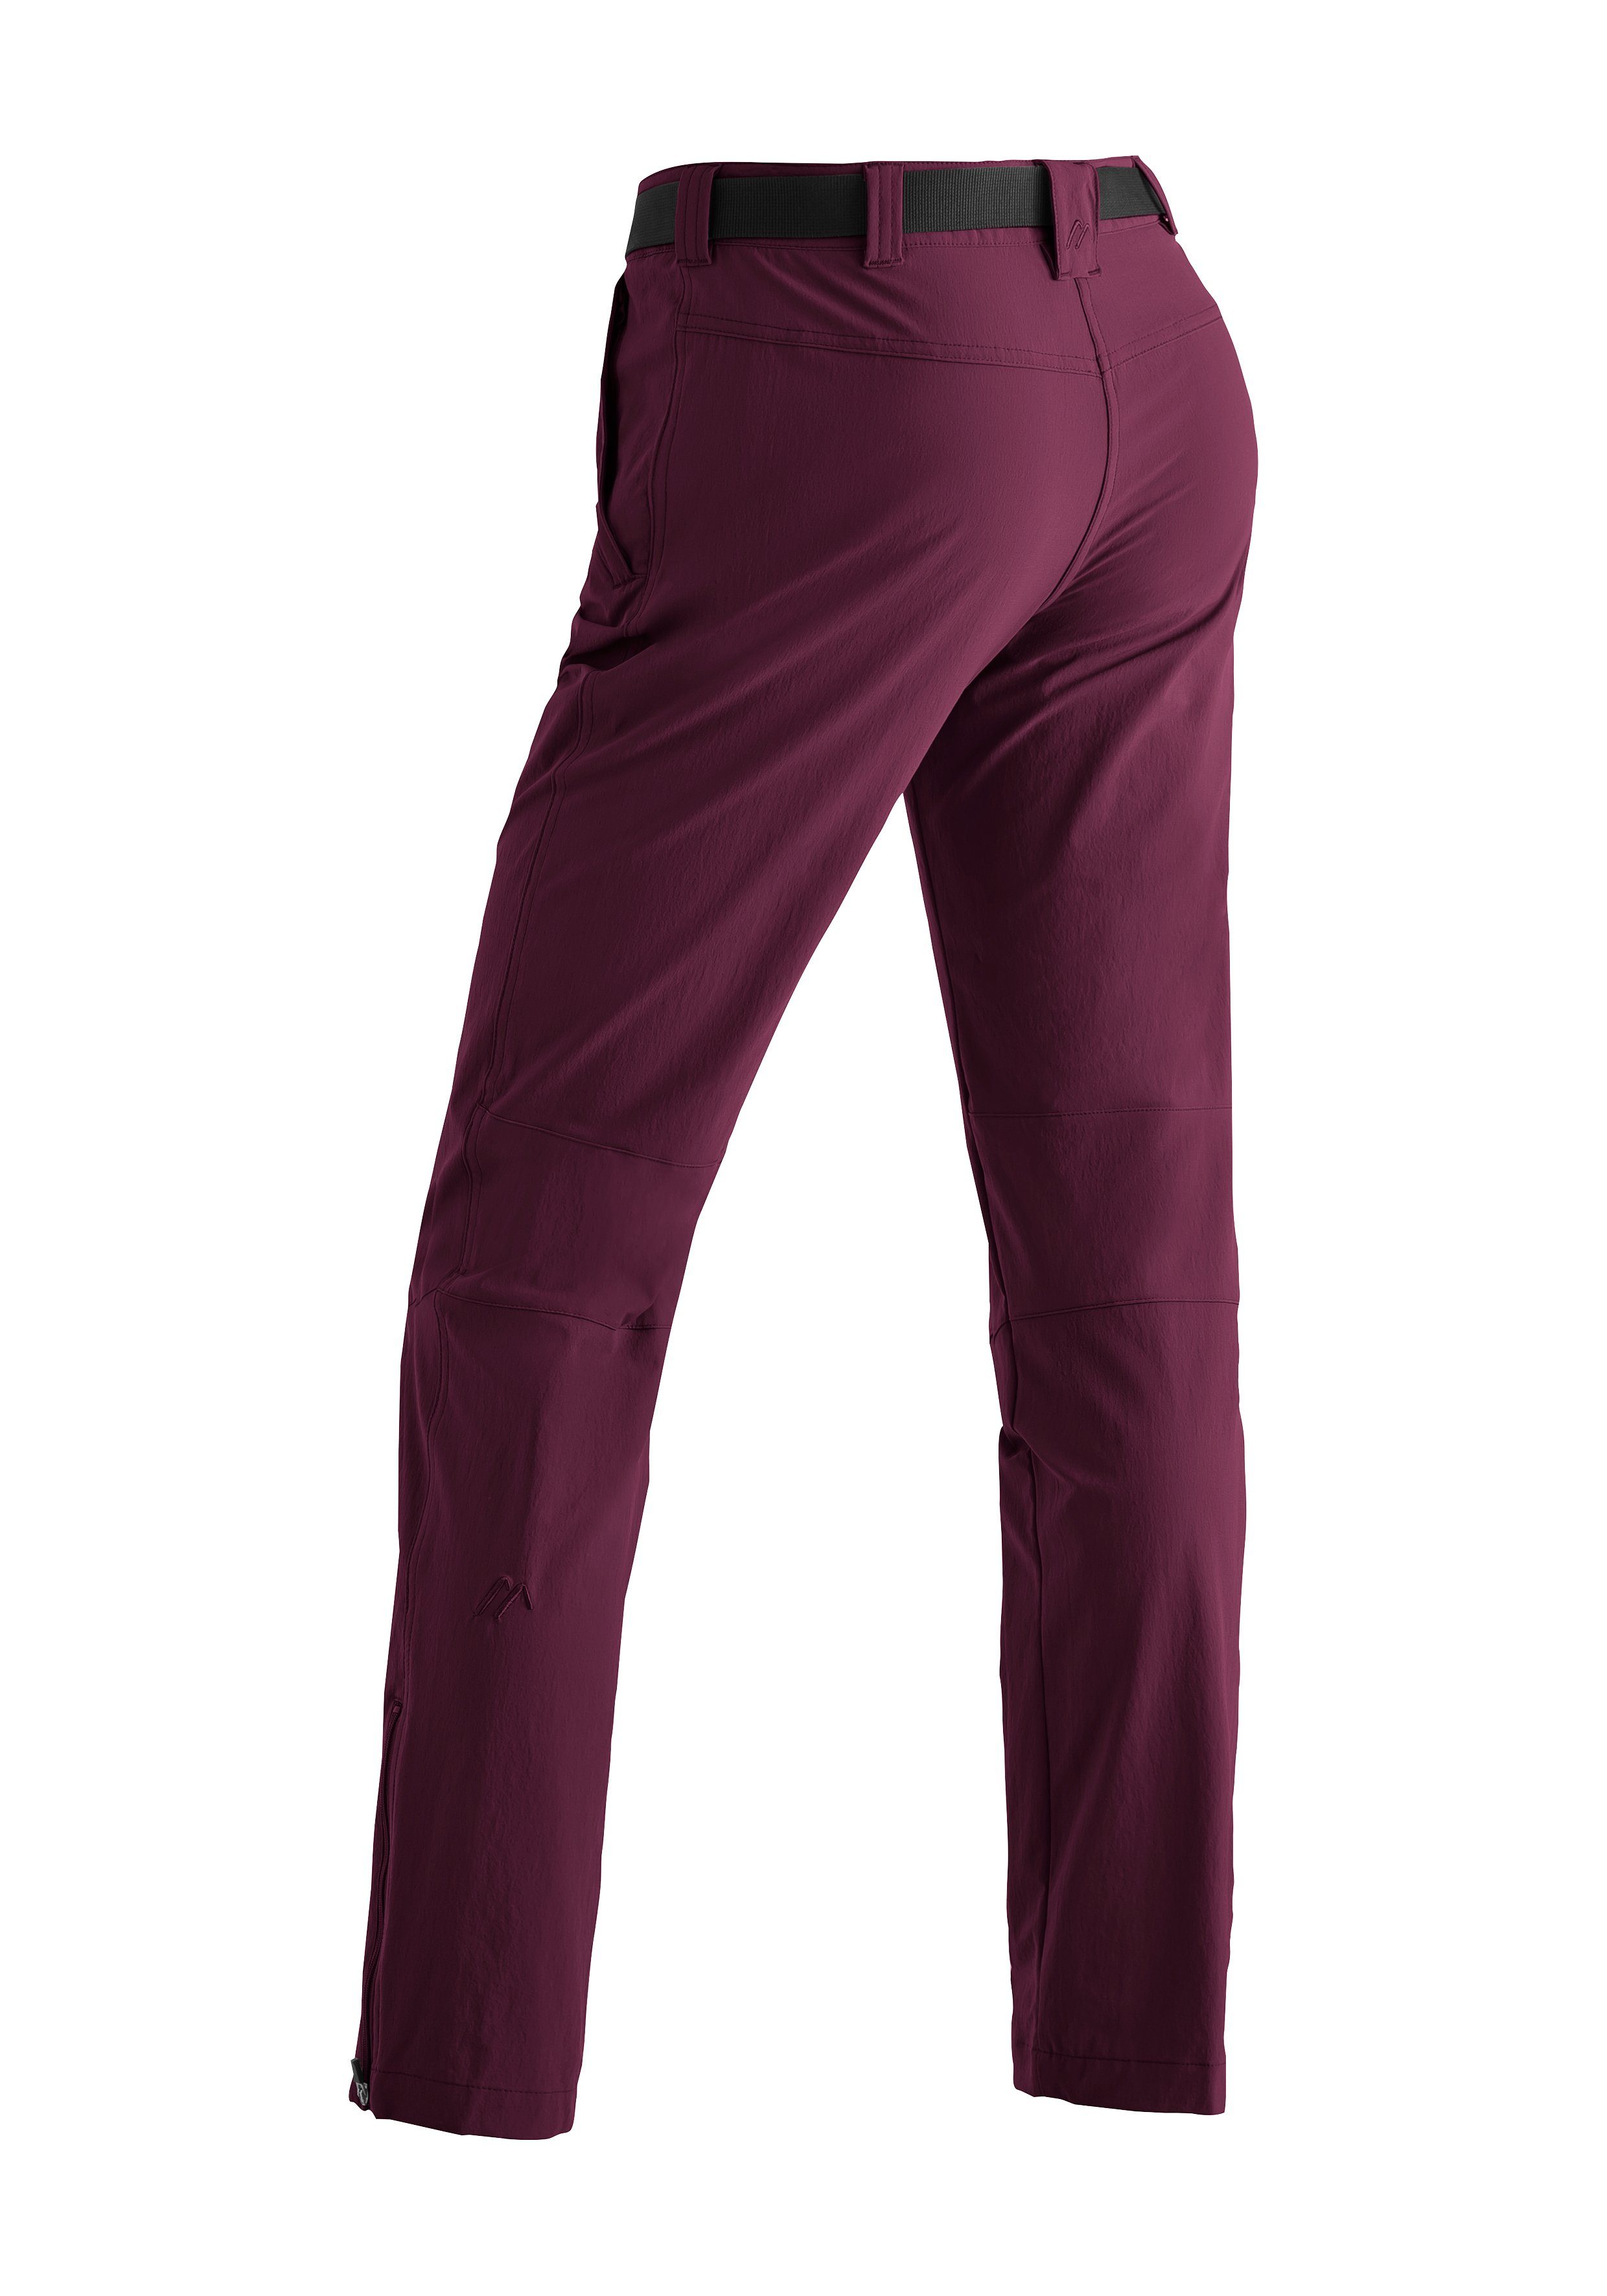 Maier Sports Damen slim aus magenta elastischem Outdoor-Hose Wanderhose, Inara Material Funktionshose